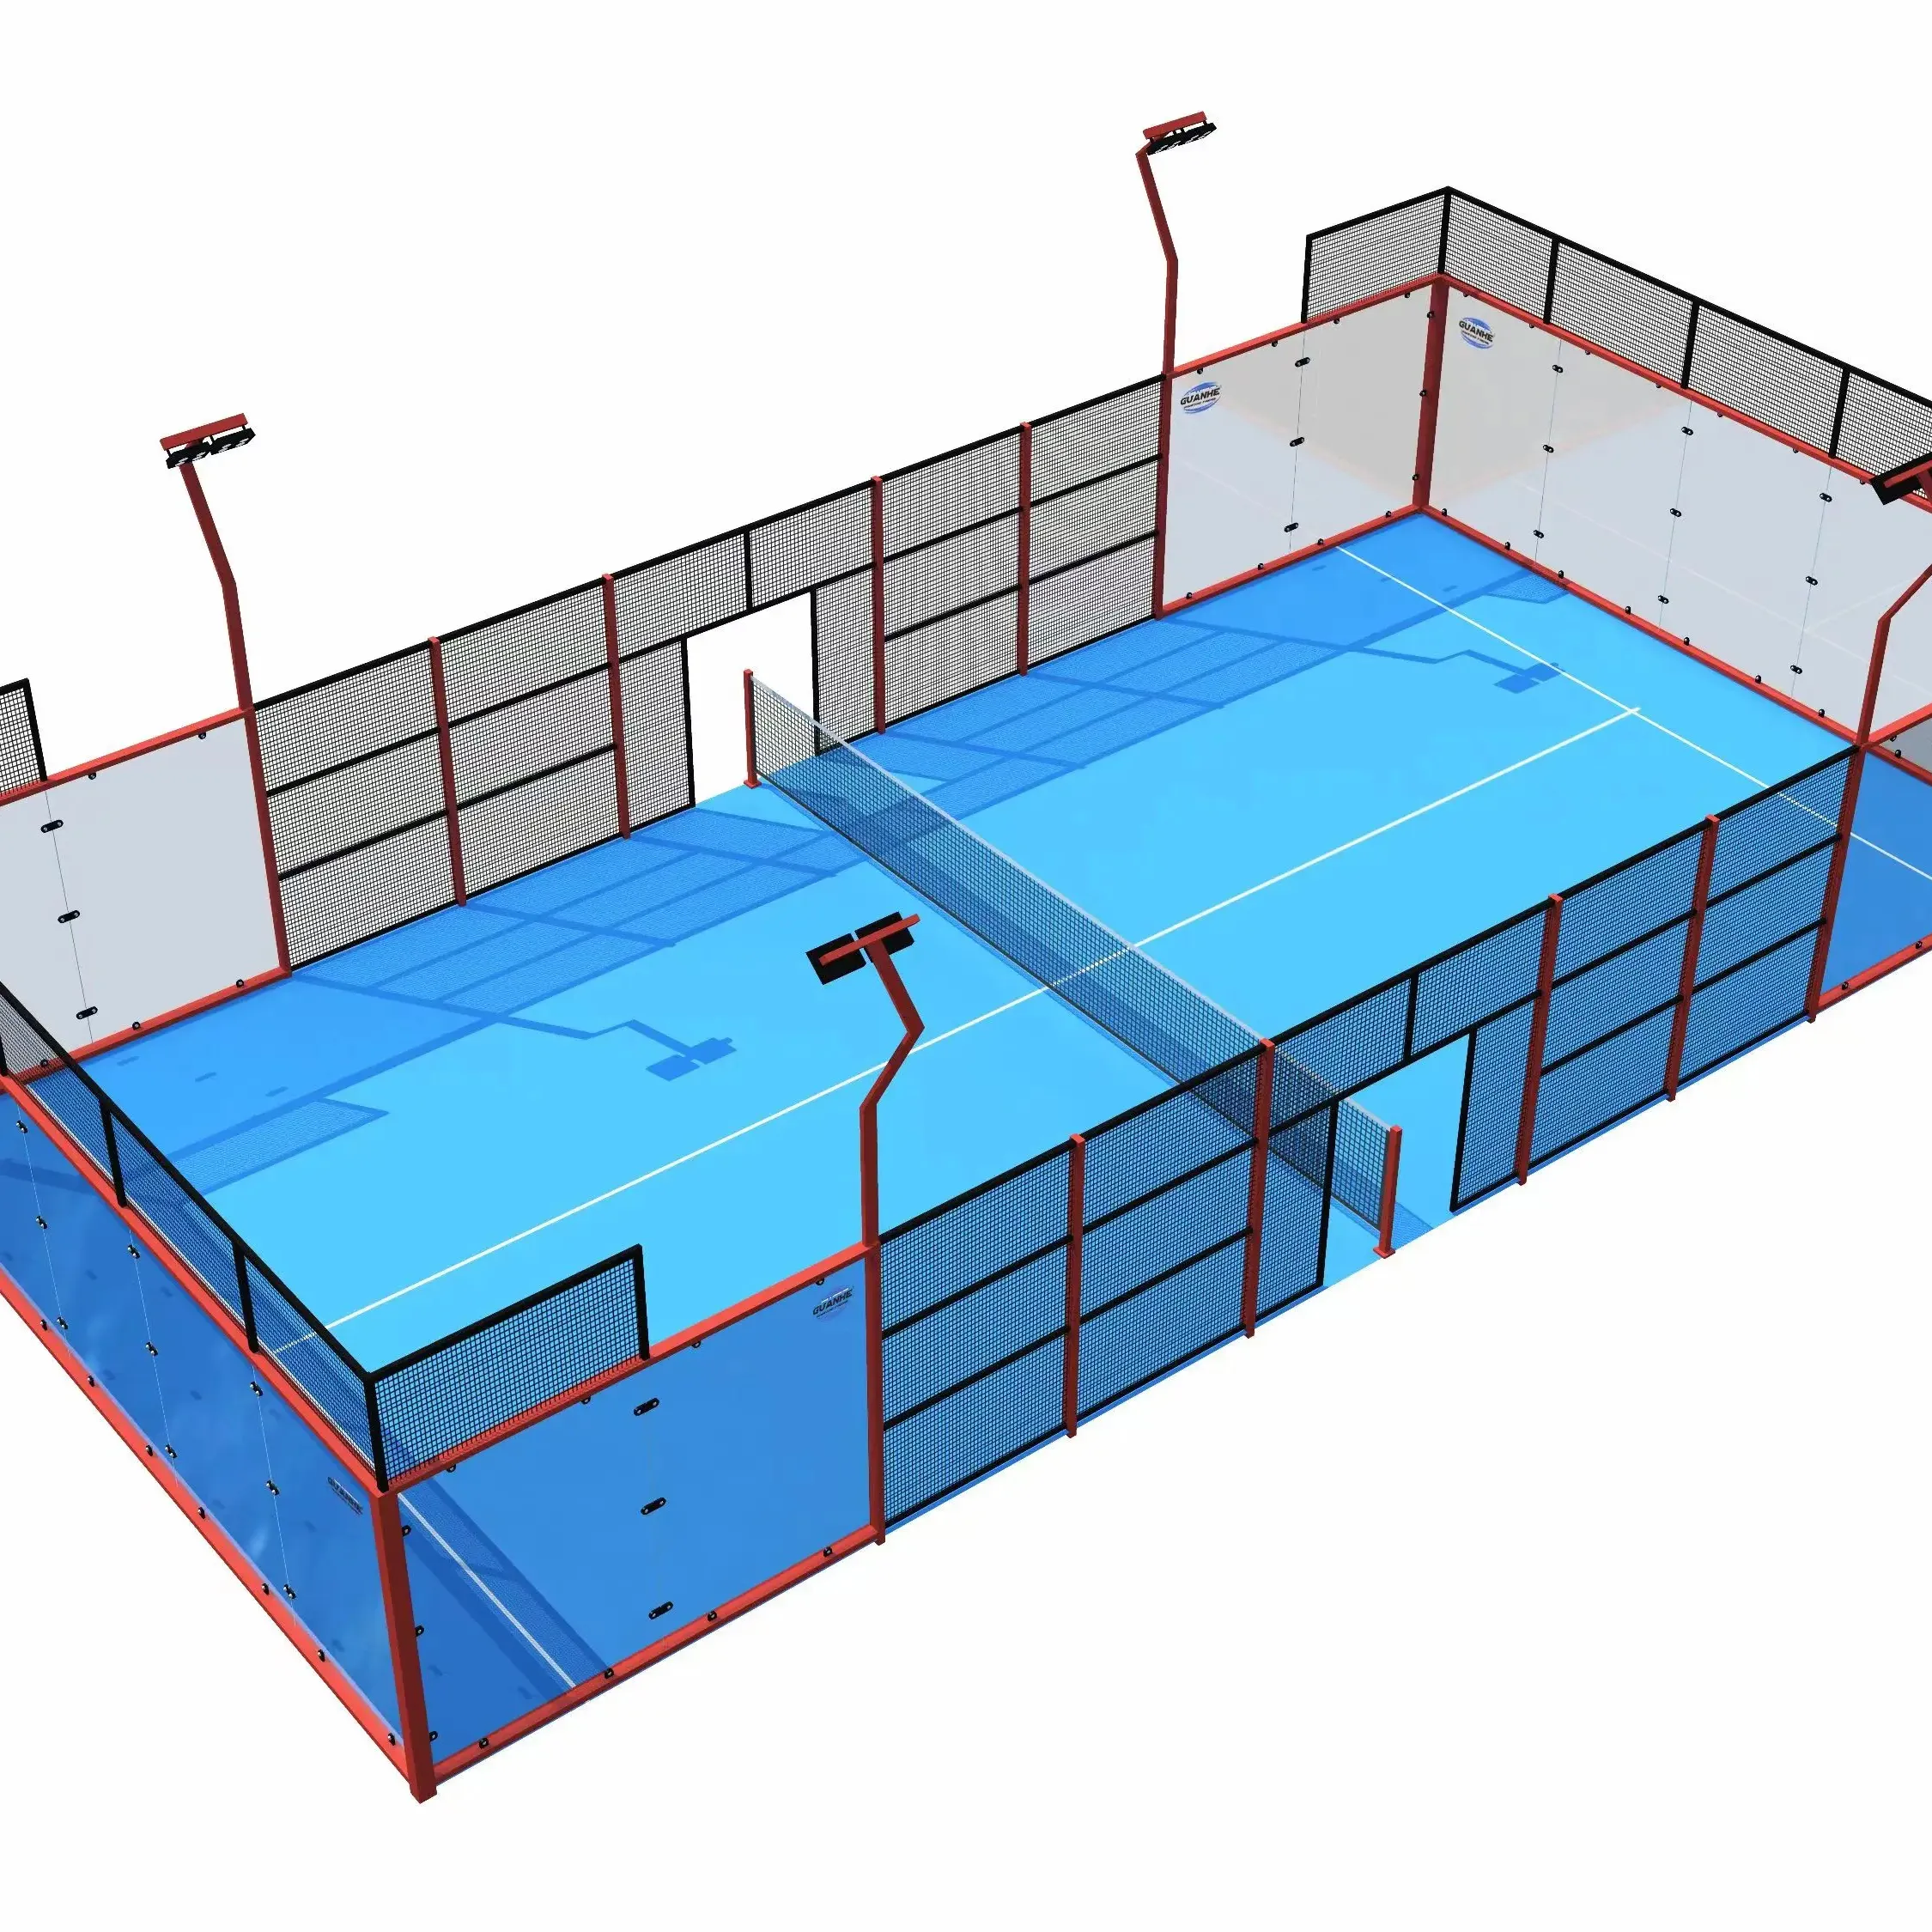 paddle tennis court/paddle tennis/paddle court padel court full panoramic paddle tennis